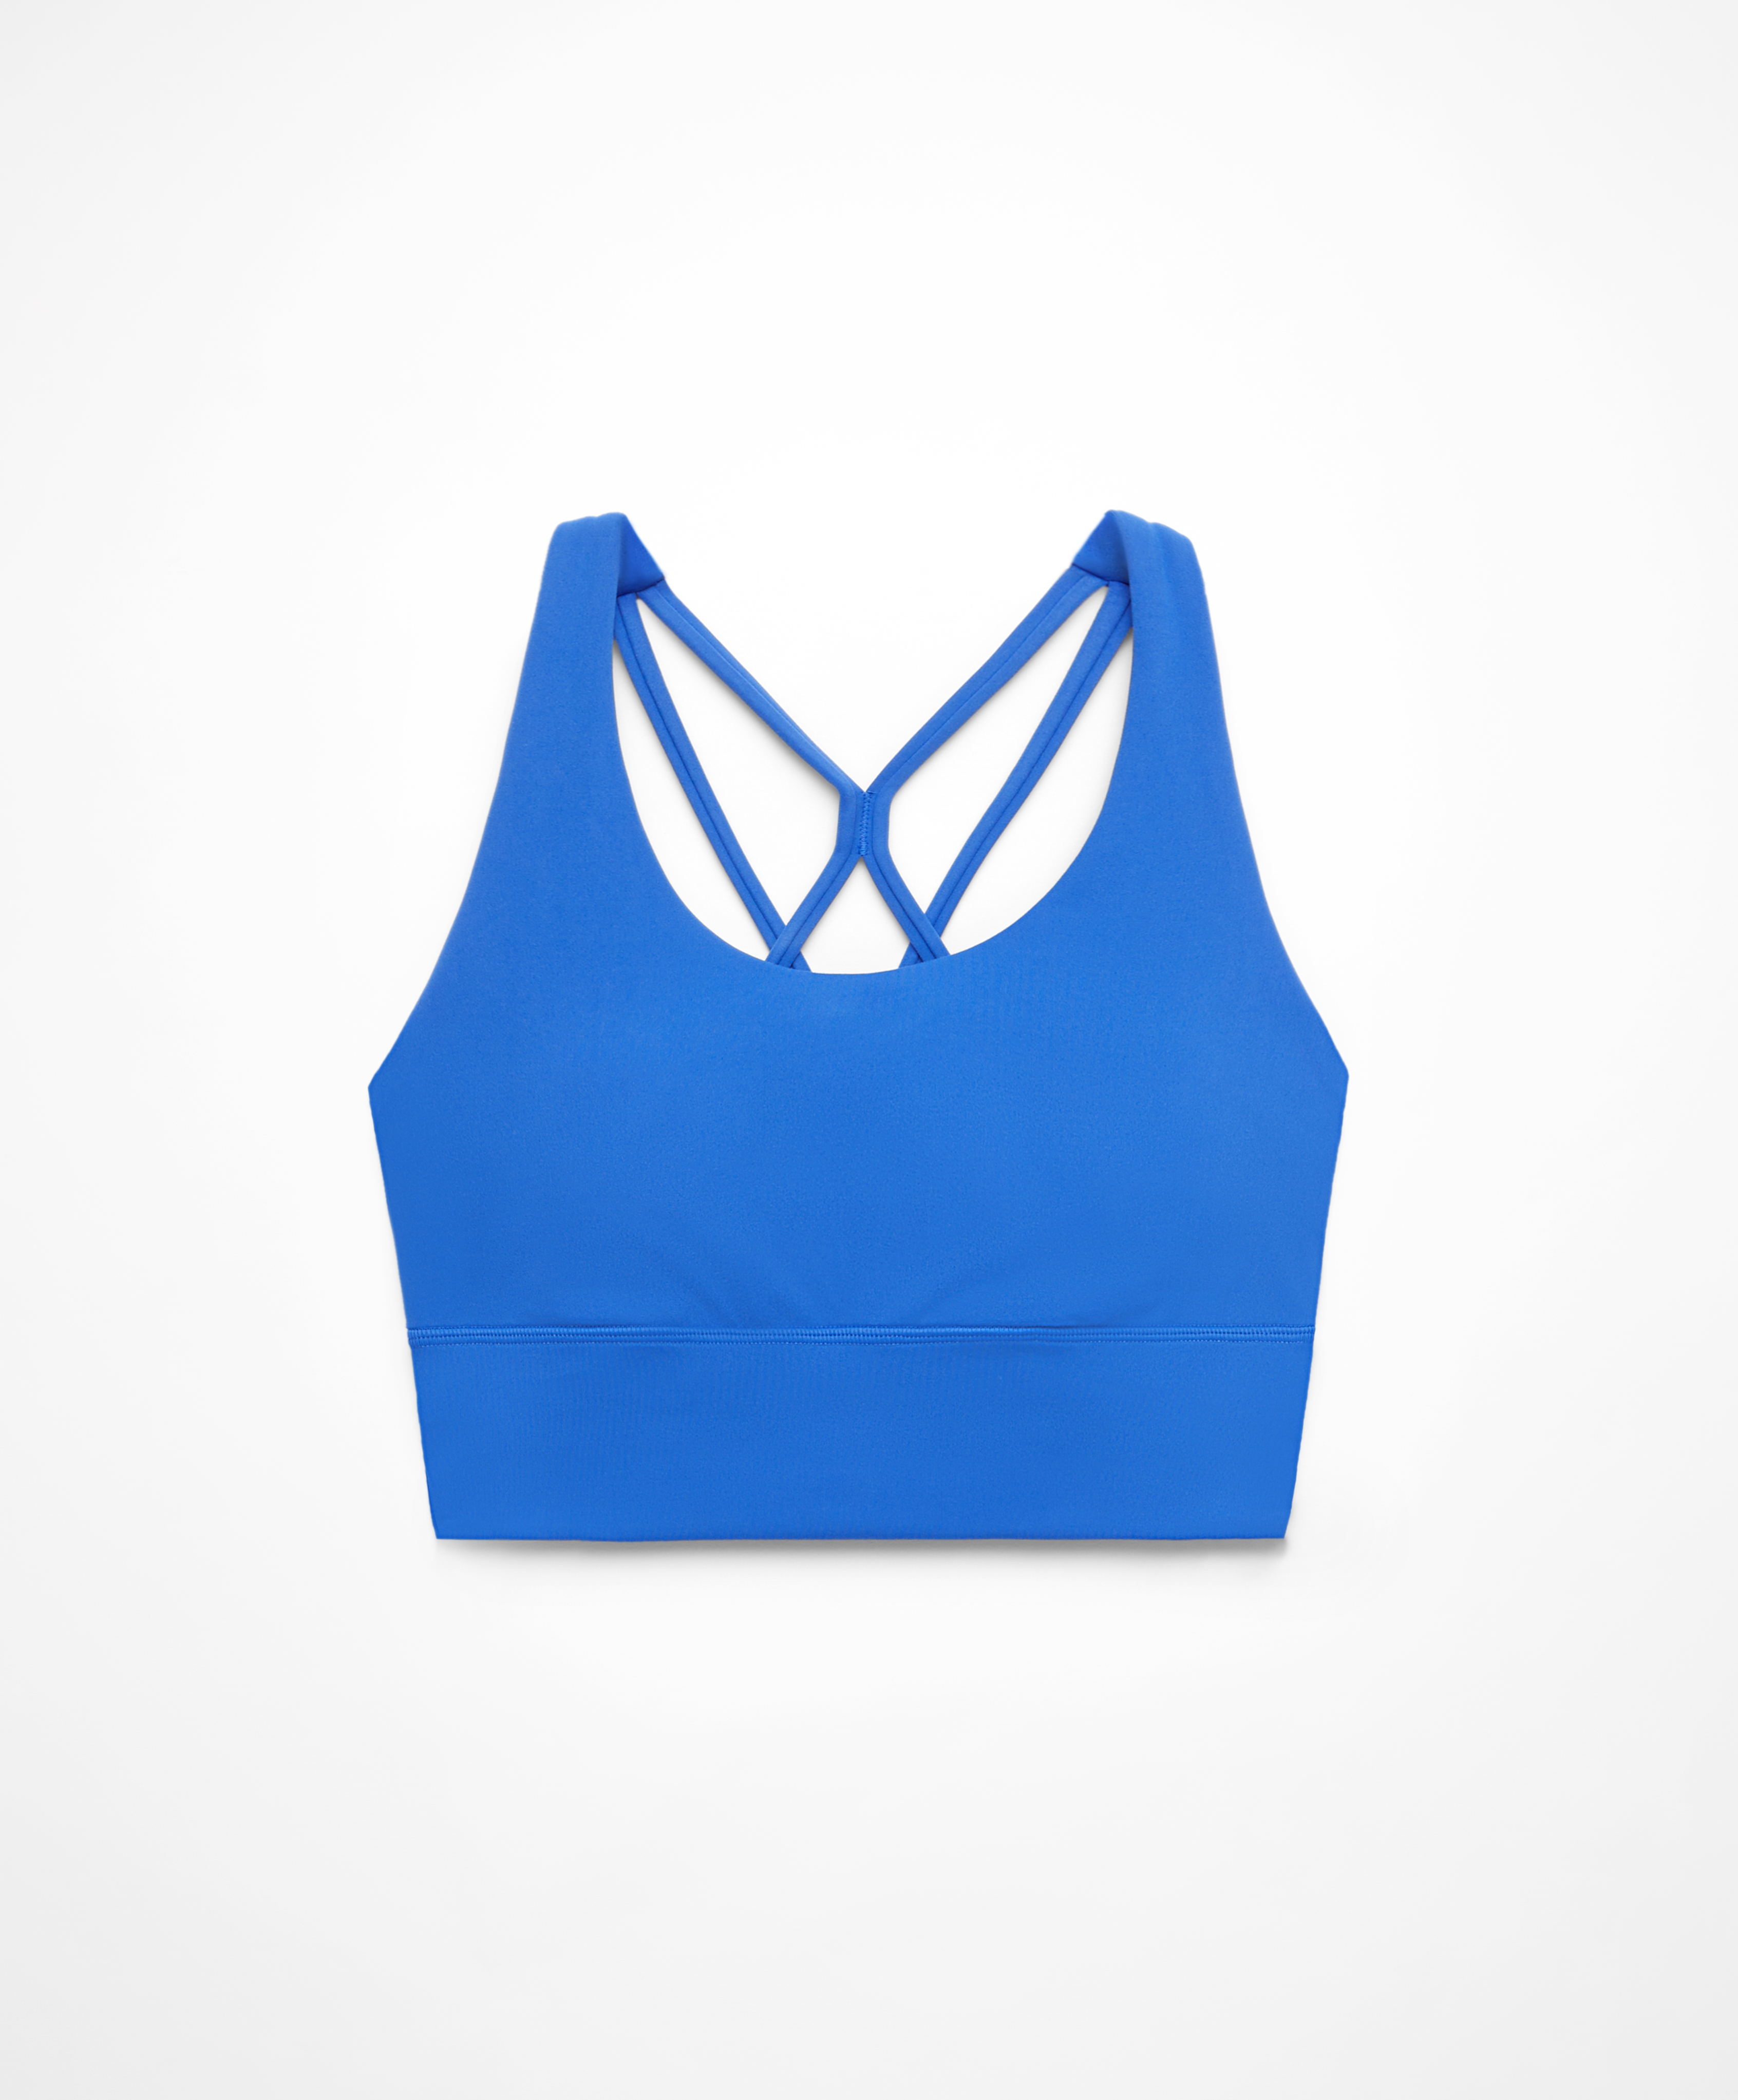 Medium-support bra